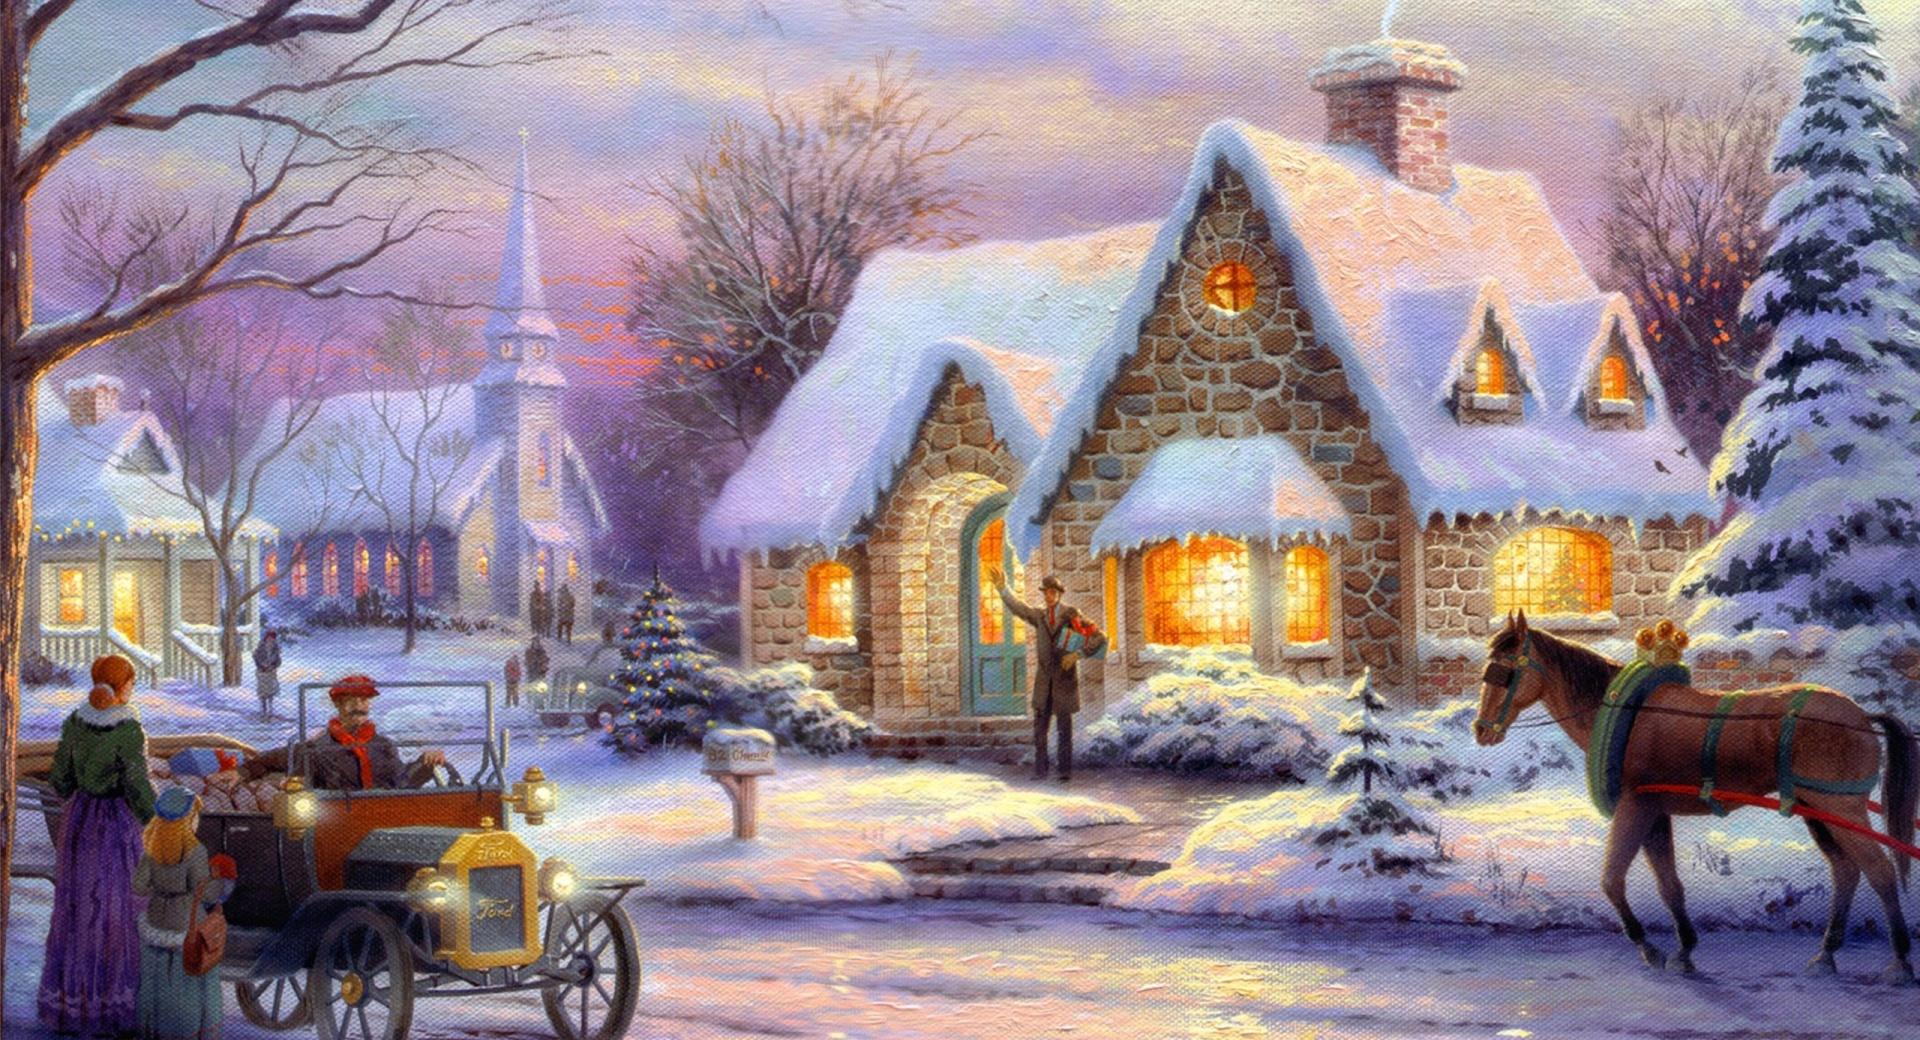 Memories Of Christmas by Thomas Kinkade at 2048 x 2048 iPad size wallpapers HD quality